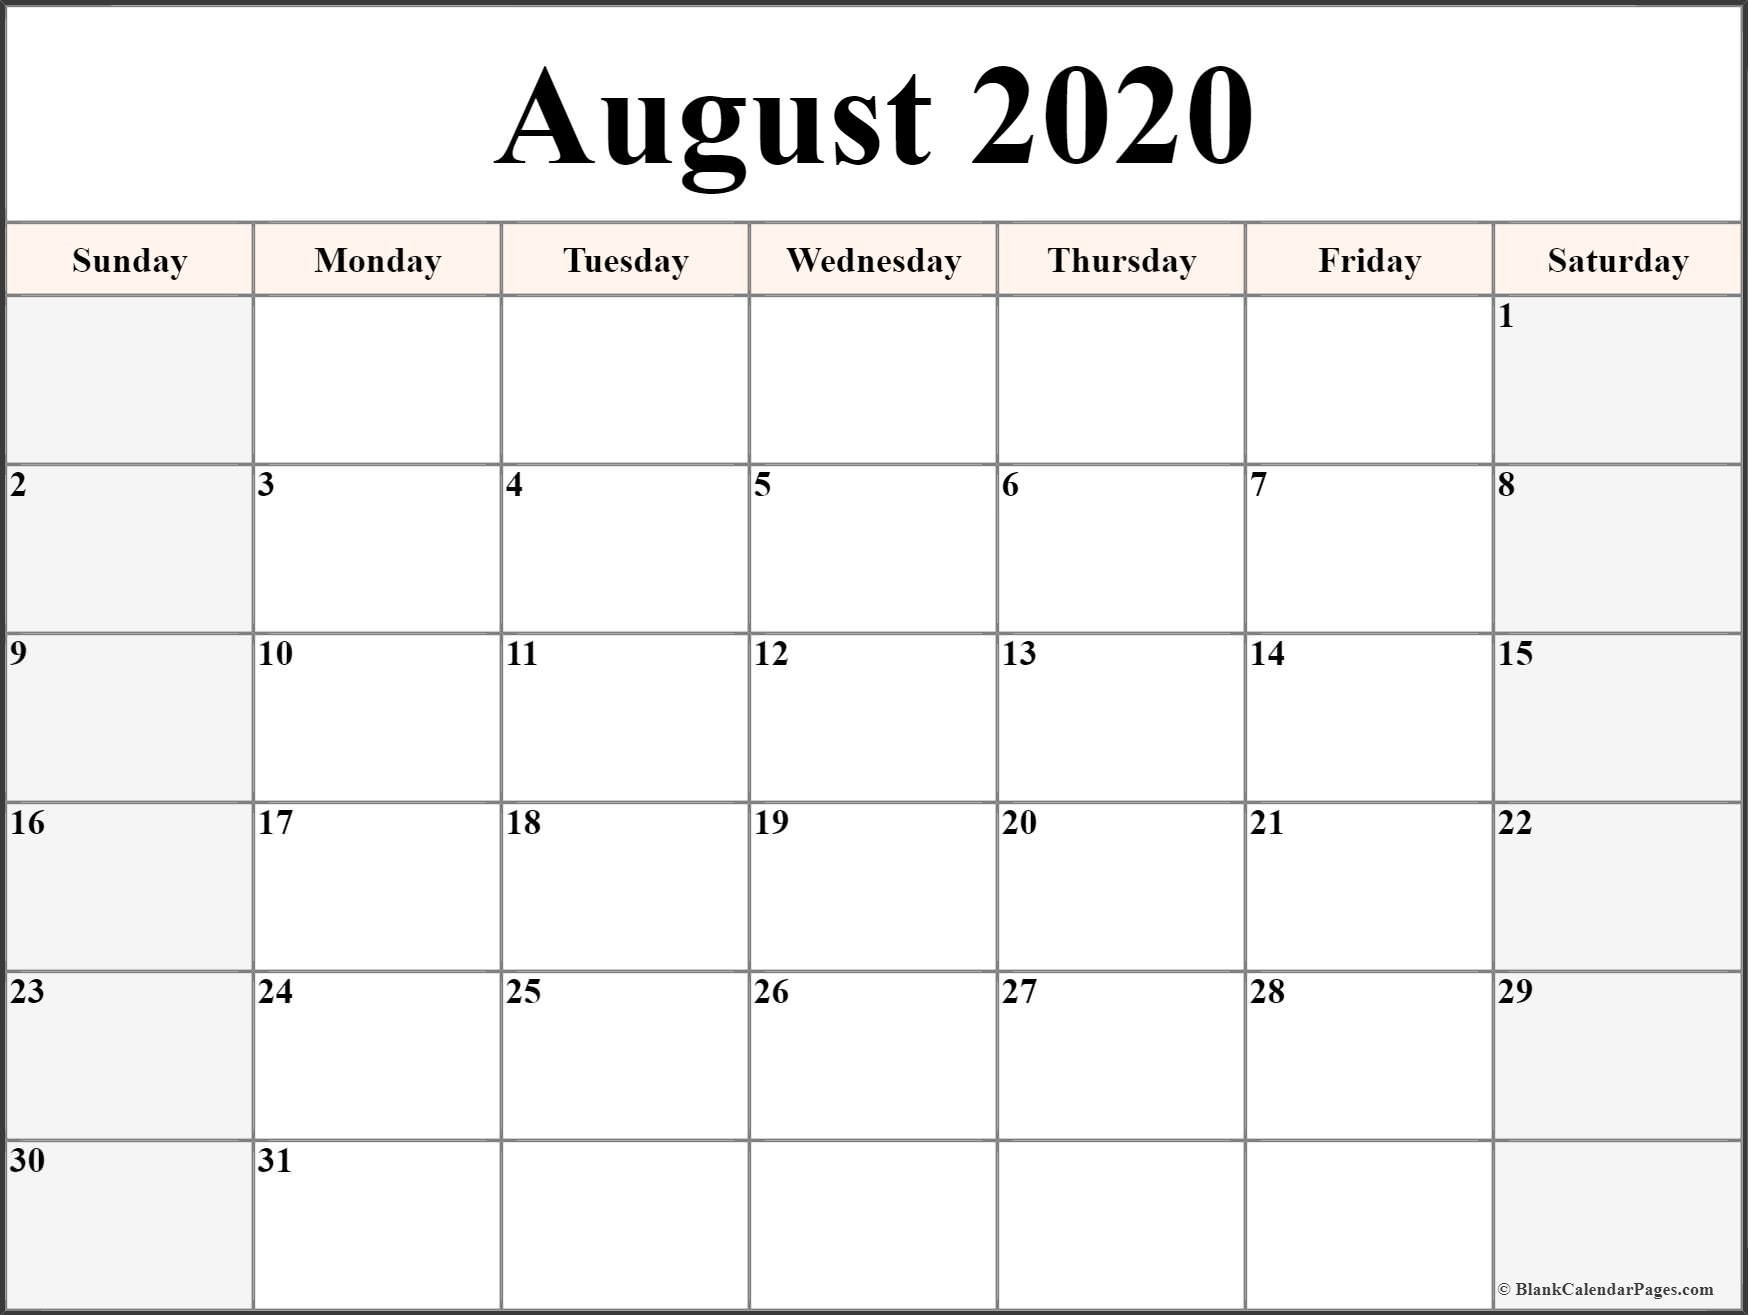 August 2020 Calendar | Free Printable Monthly Calendars-Calendar Template 2020 June July